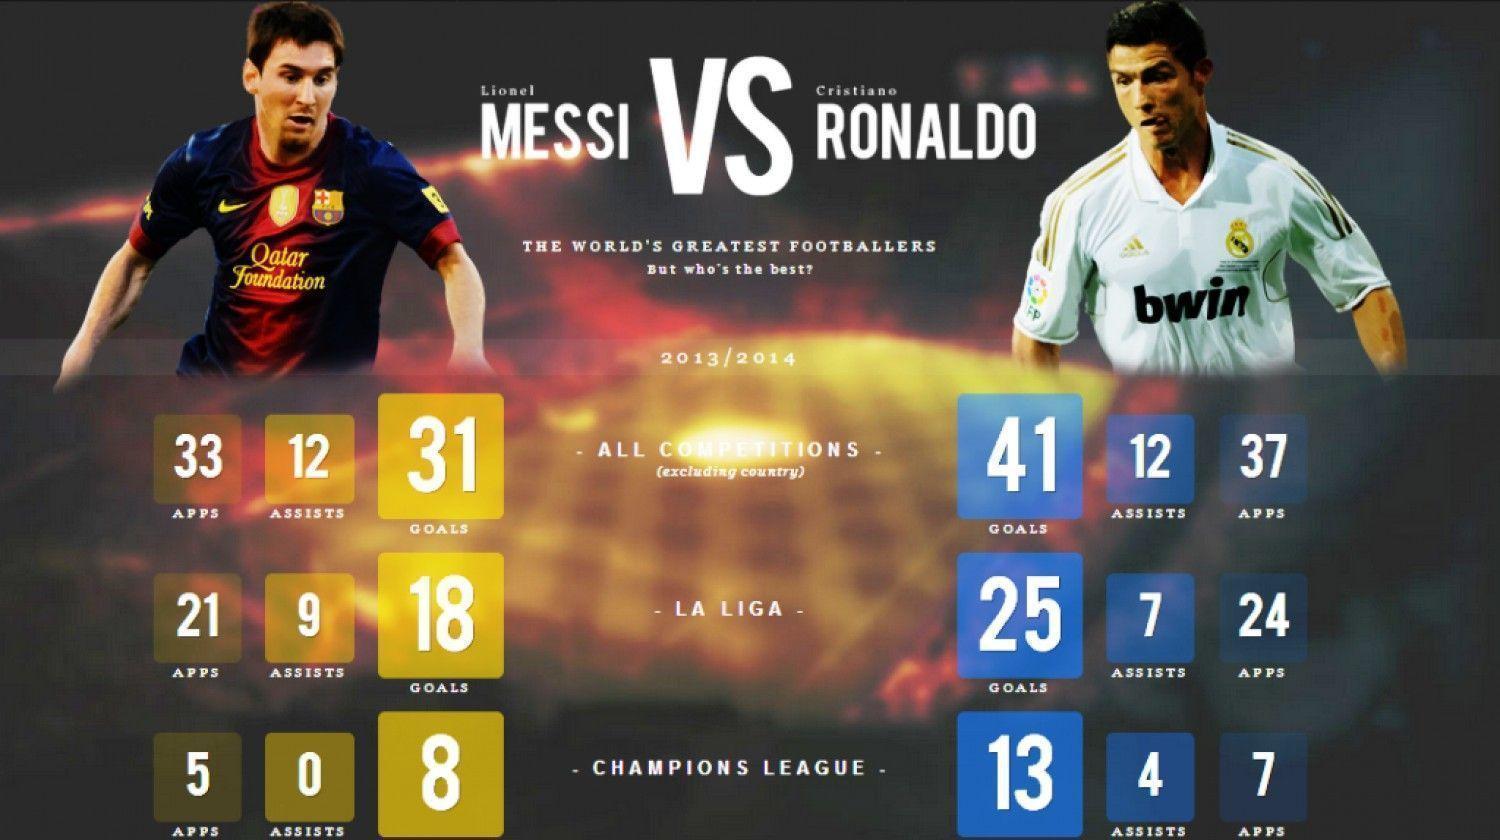 messi vs ronaldo 2014 stats. Funny picture photo, funny jokes